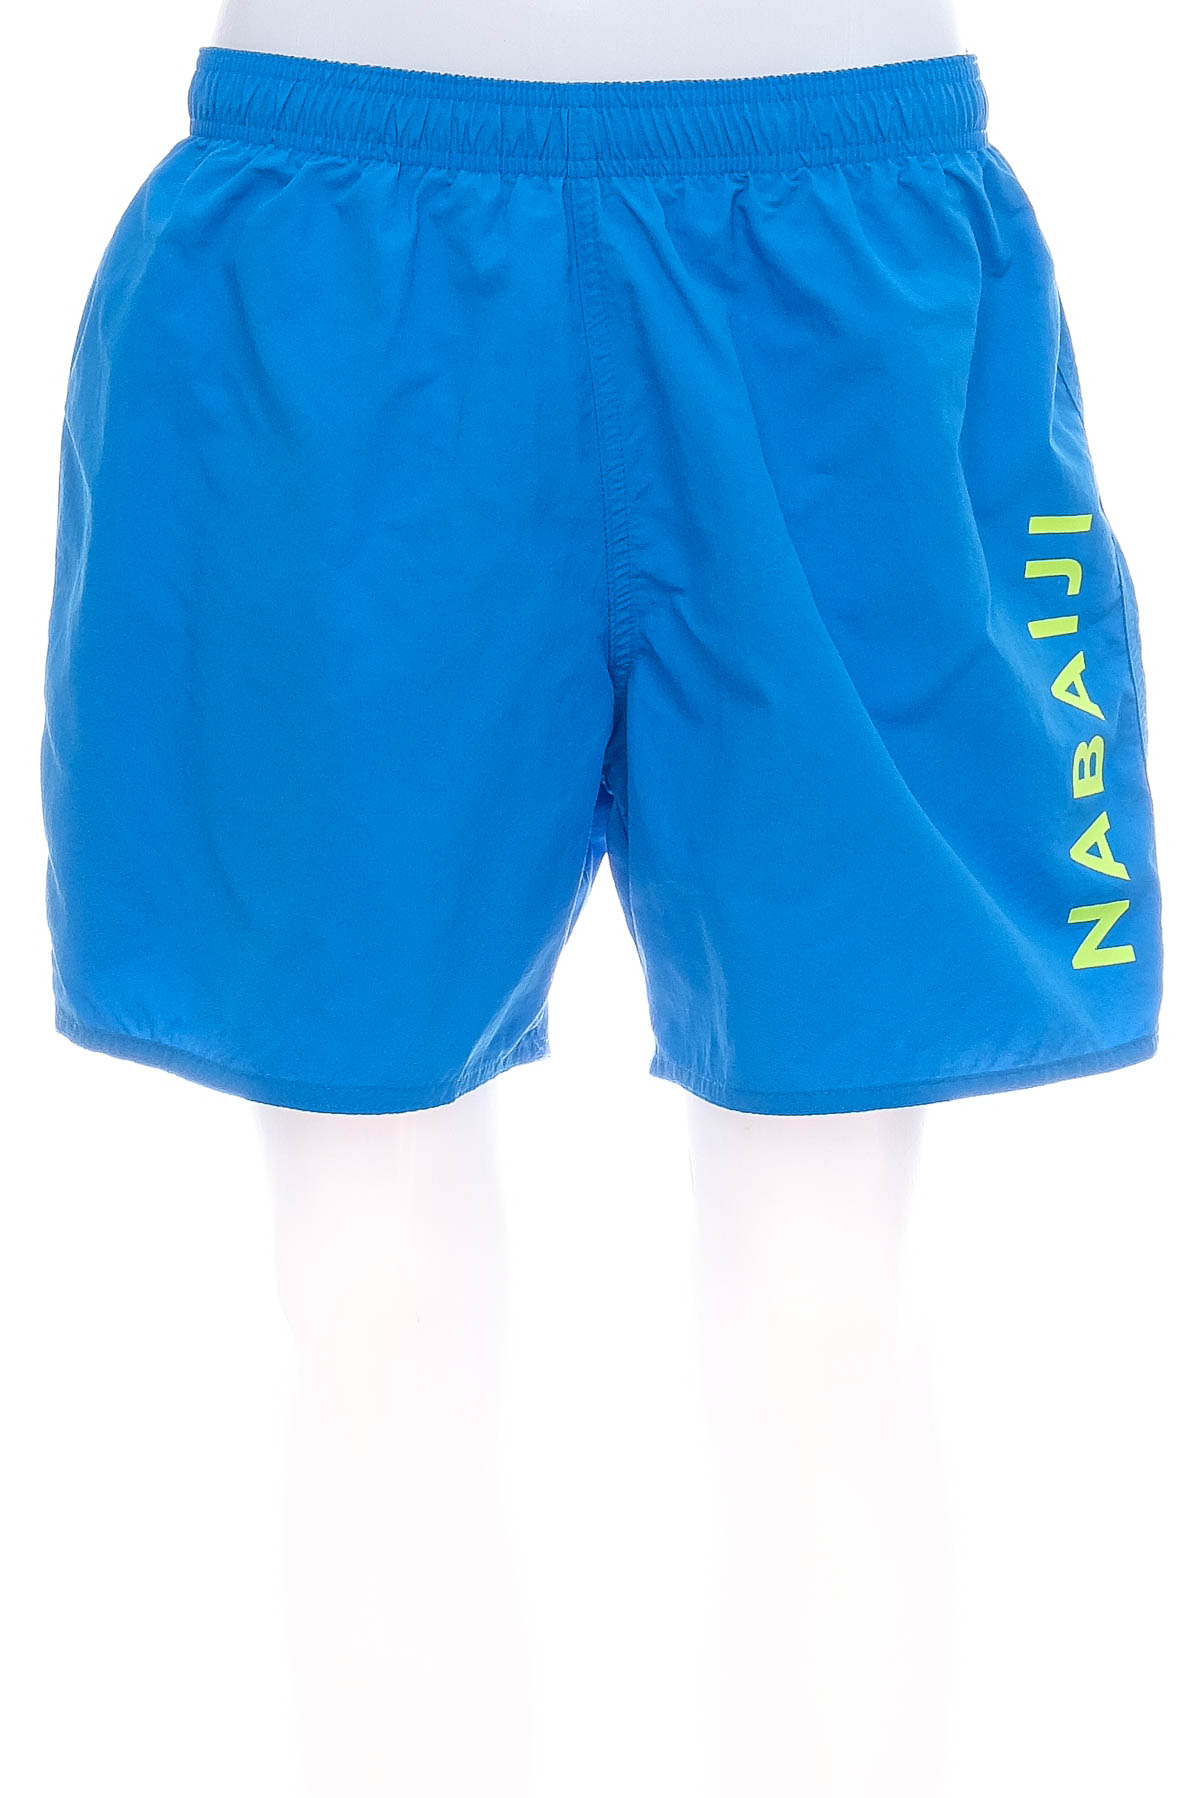 Men's shorts - Nabaiji - 0